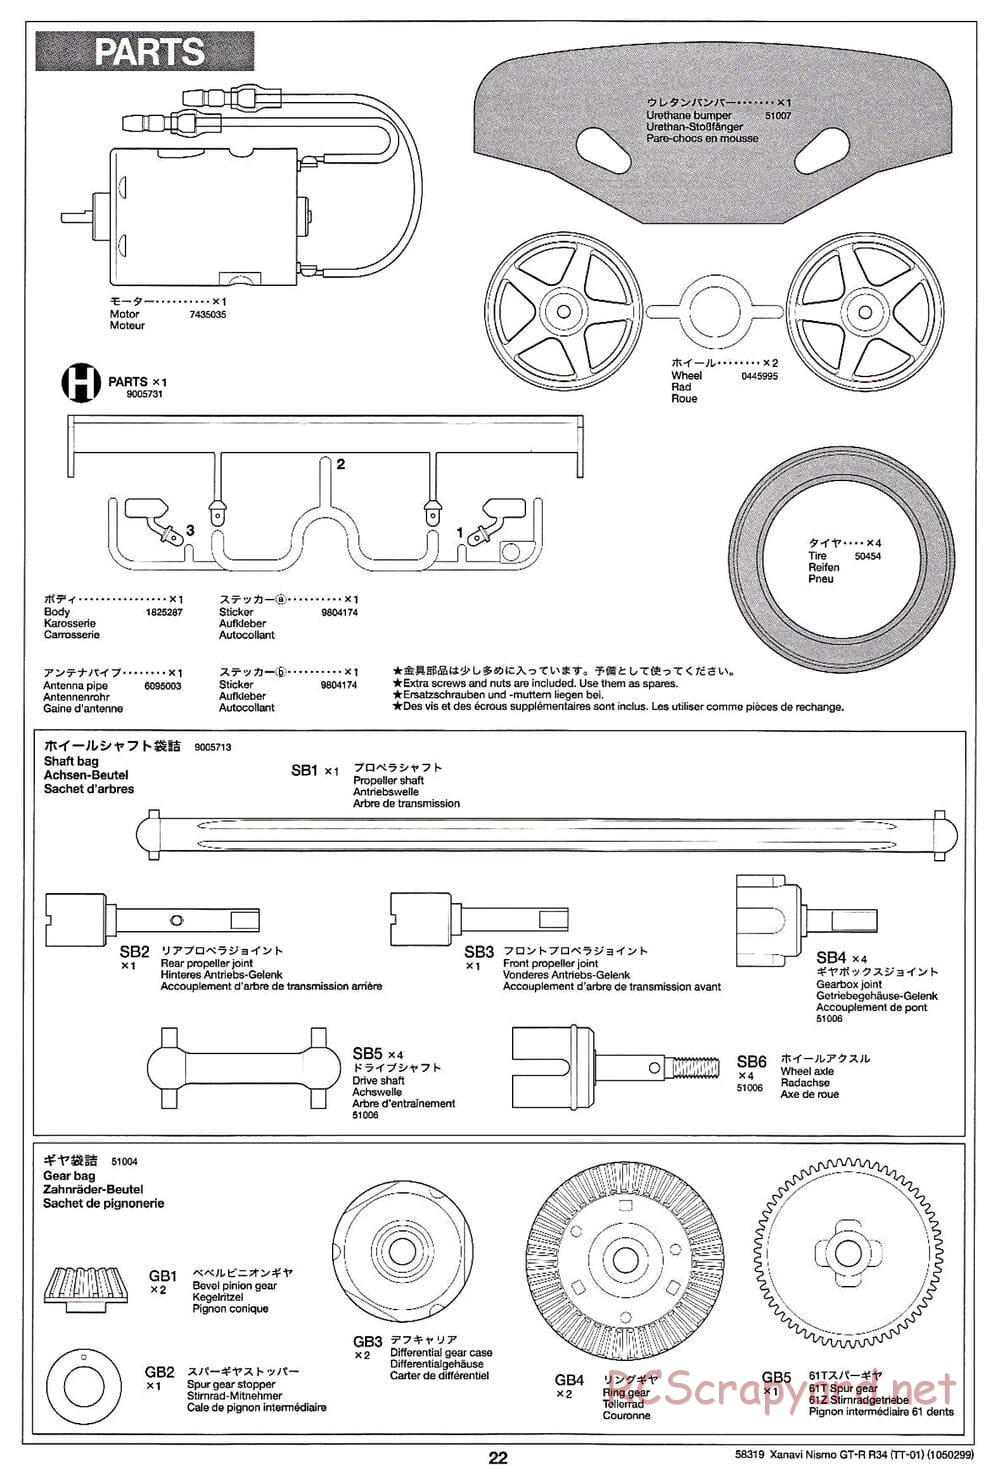 Tamiya - Xanavi Nismo GT-R R34 - TT-01 Chassis - Manual - Page 22